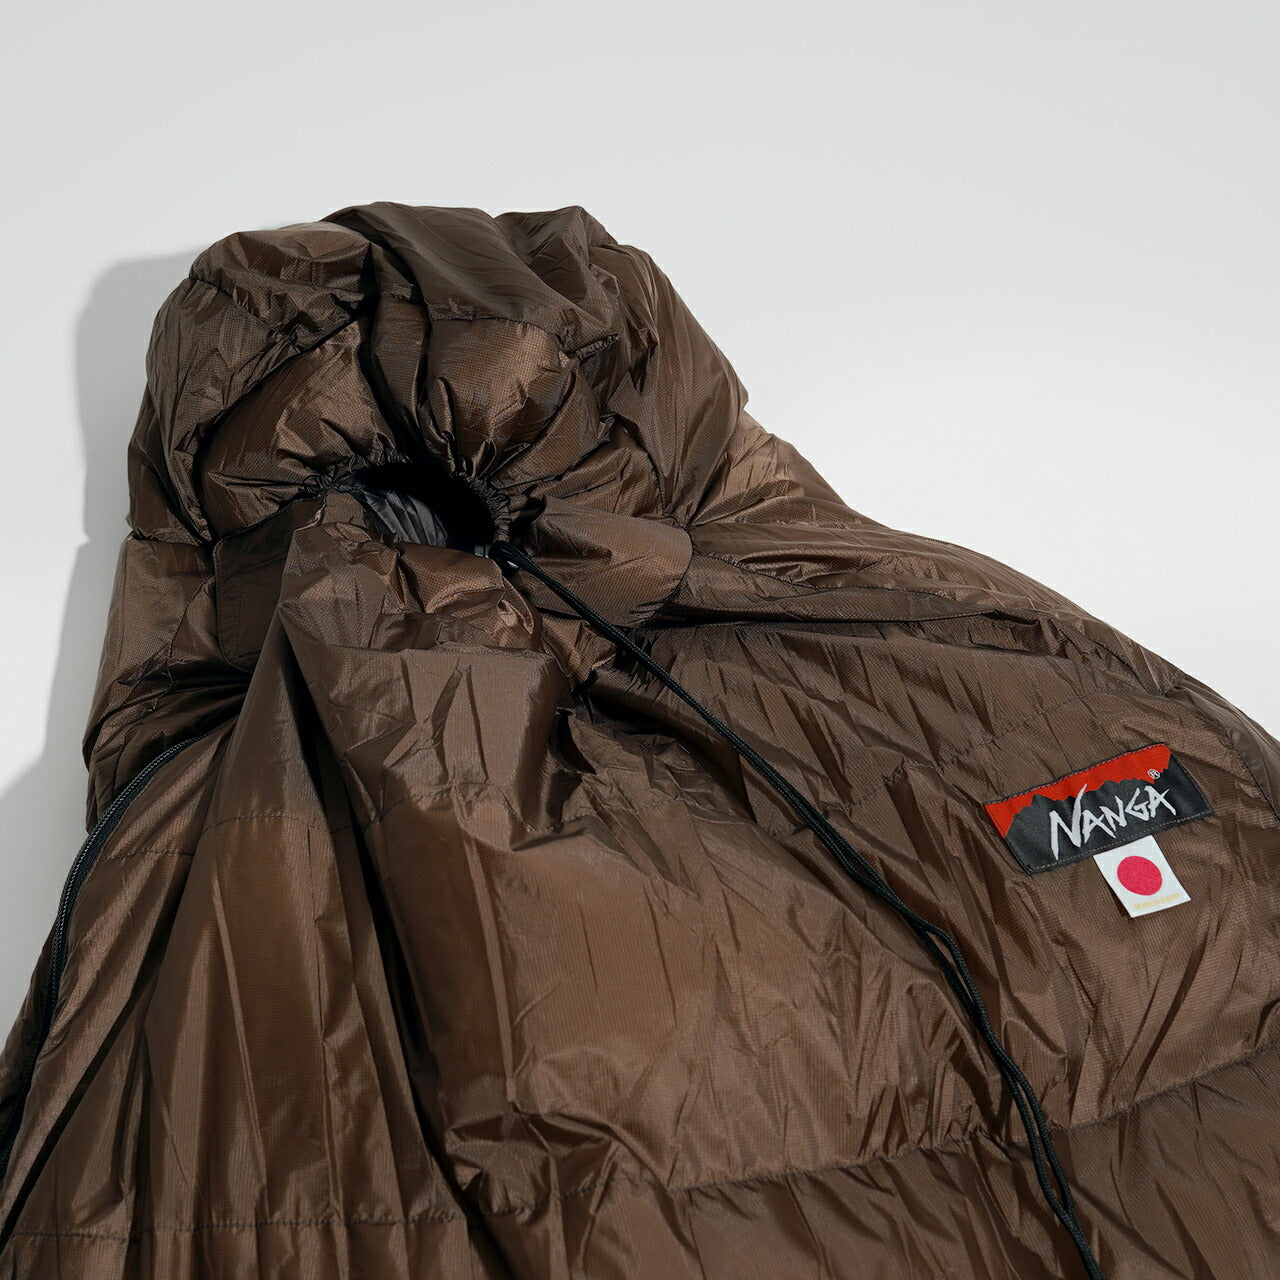 NANGA ナンガ オーロラ600DX レギュラー ブラウン - 寝袋